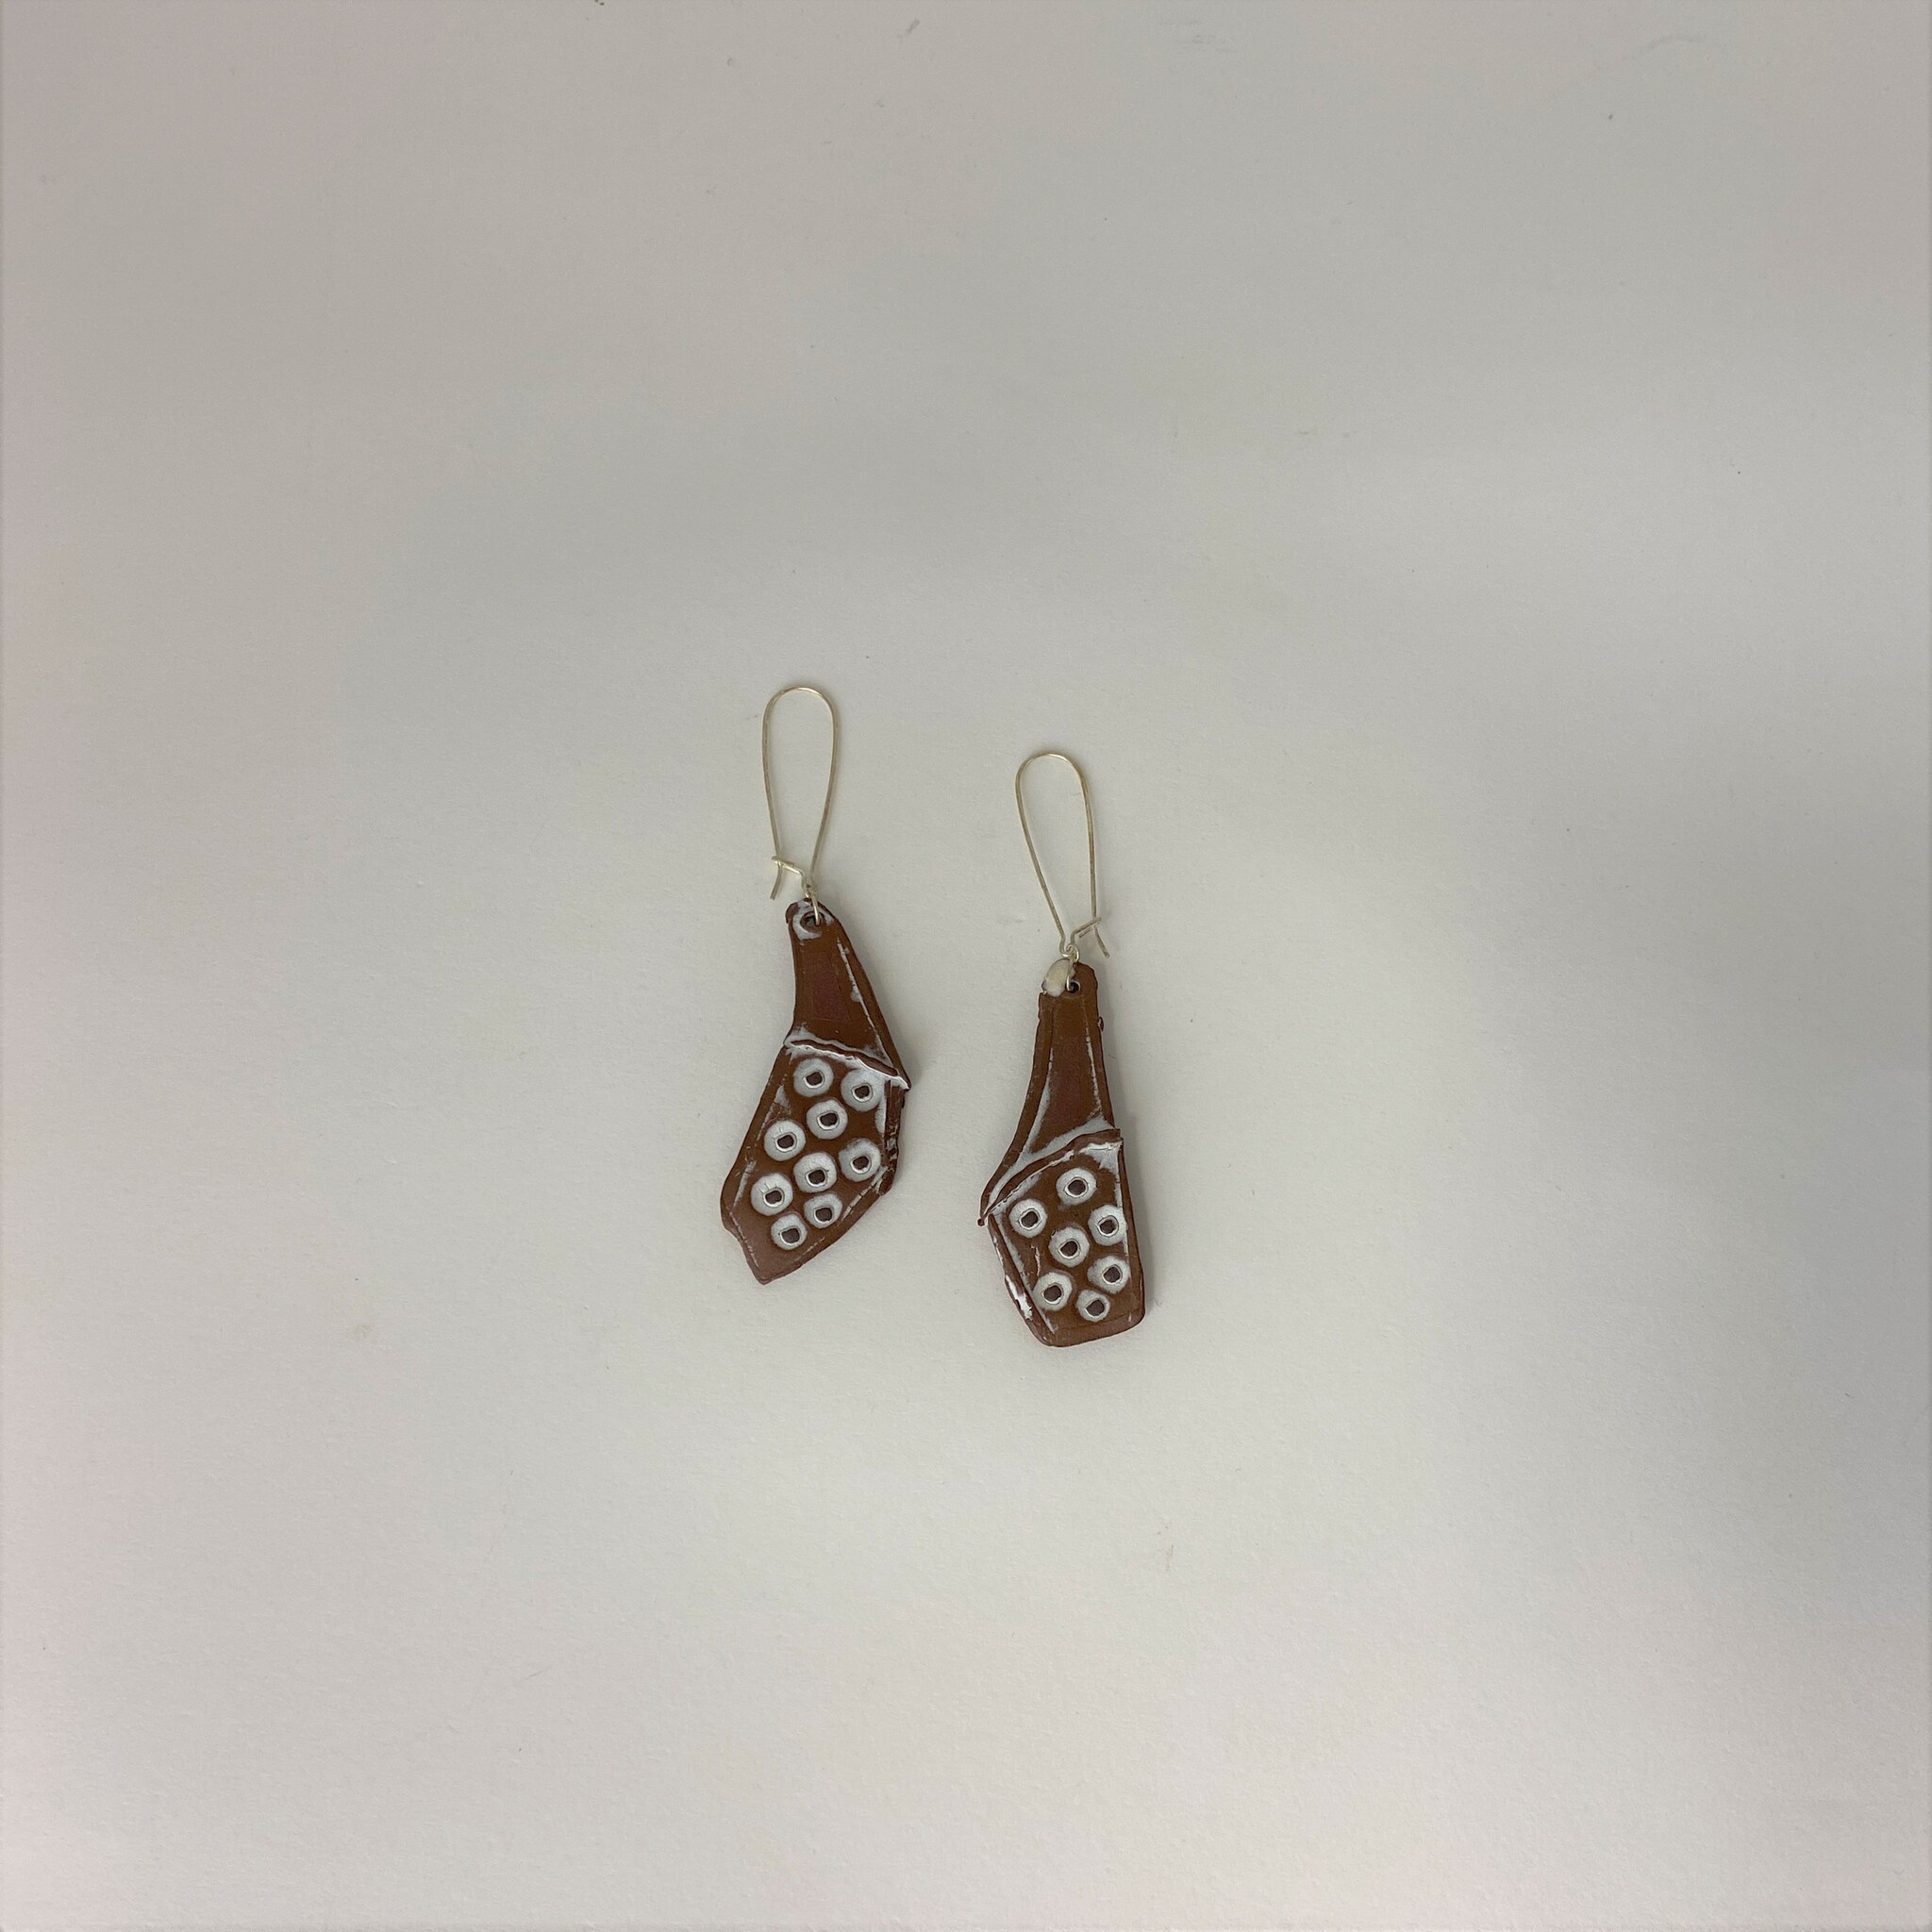 Breana Ferreira Stone earrings